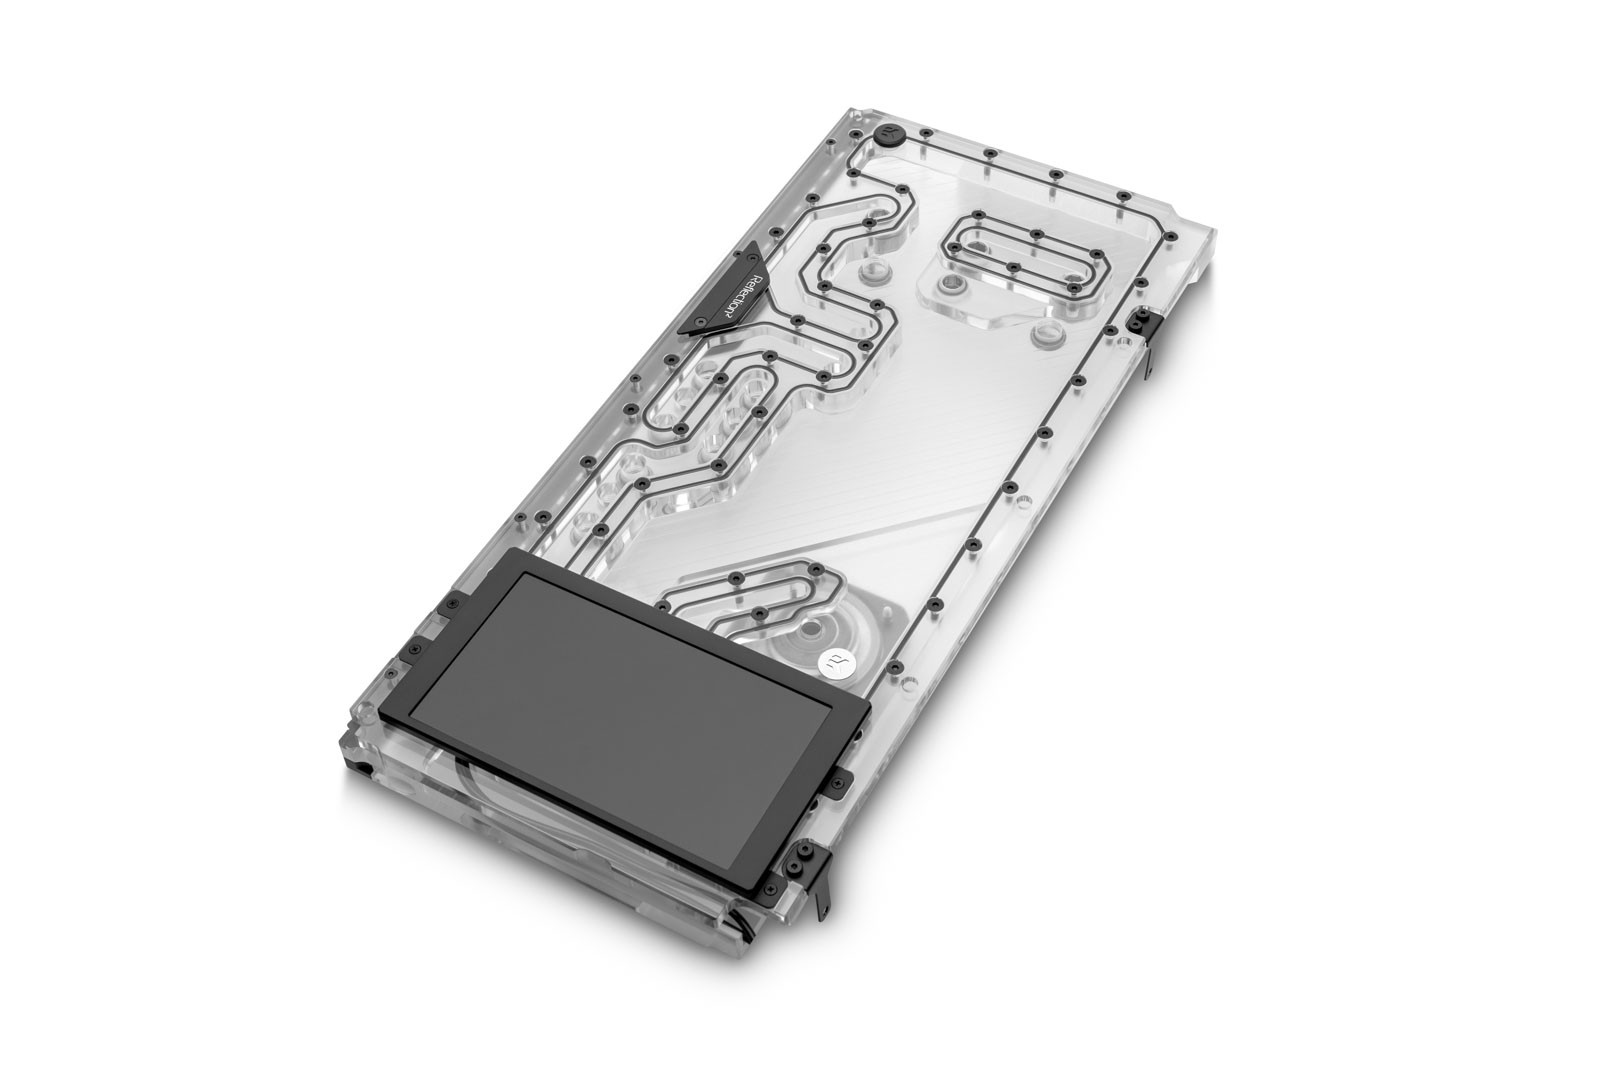 LIAN LI O11D ケース液晶付きディストリビューションプレートを発表